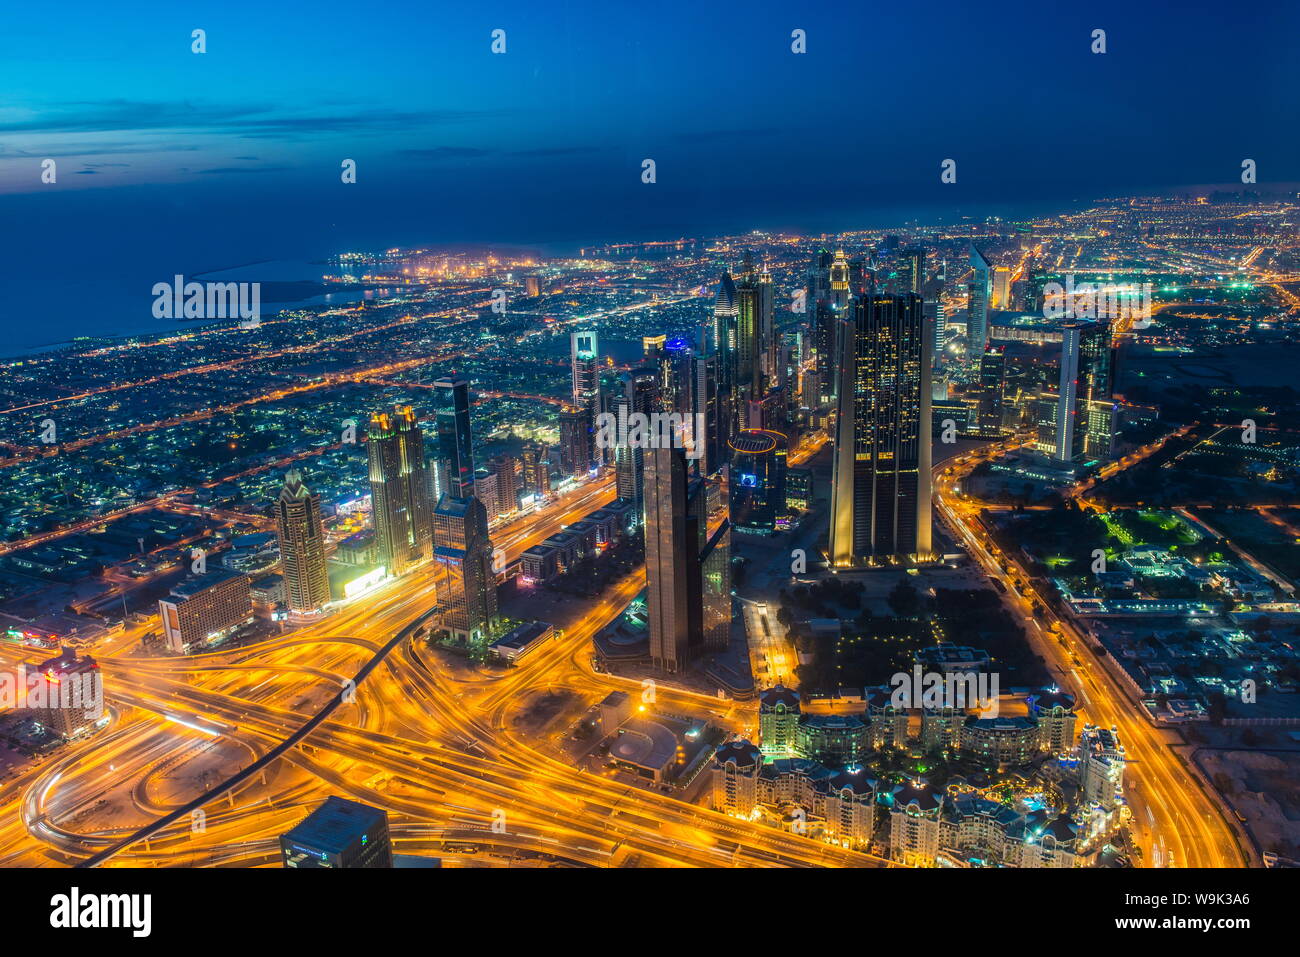 View over Dubai from Burj Khalifa at night, Dubai, United Arab Emirates, Middle East Stock Photo